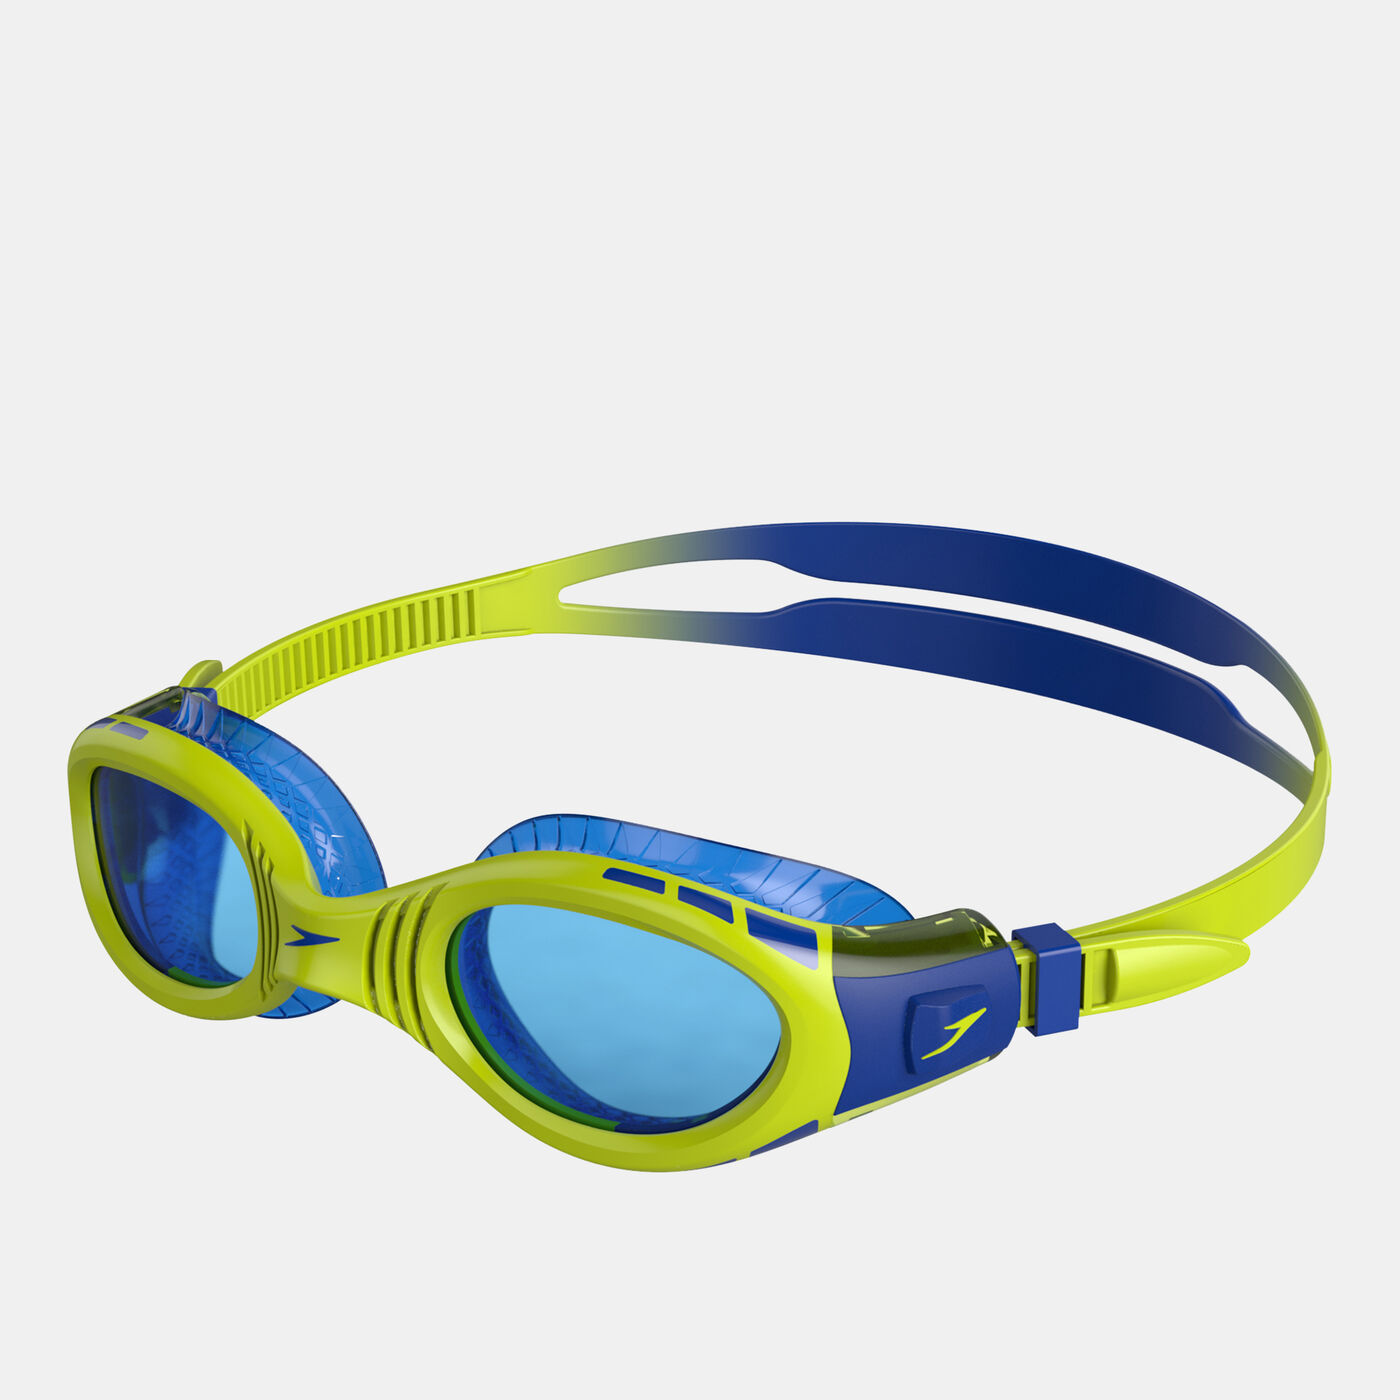 Kids' Futura Biofuse Flexiseal Swimming Goggles